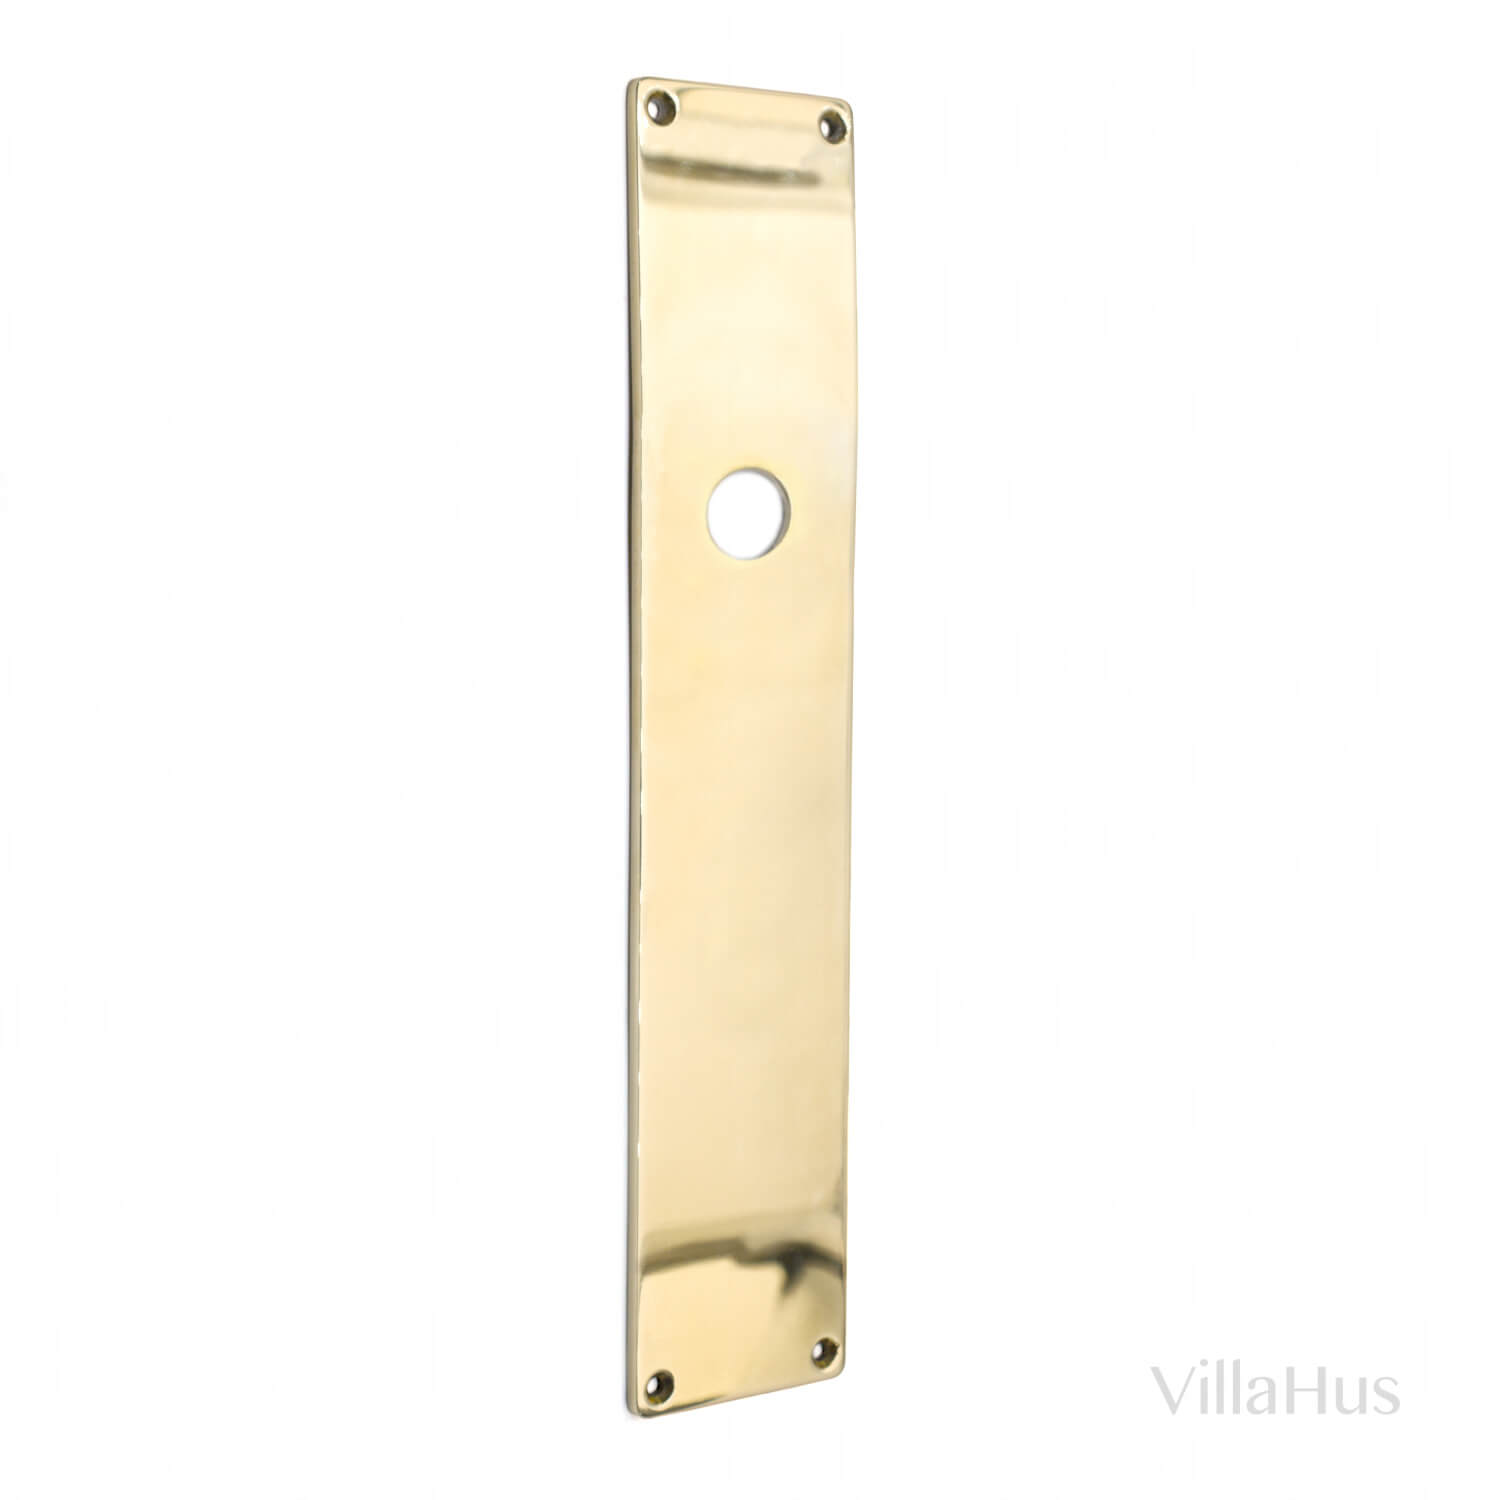 Backplate - Polished unlacquered brass - Model ESKAN - Brass